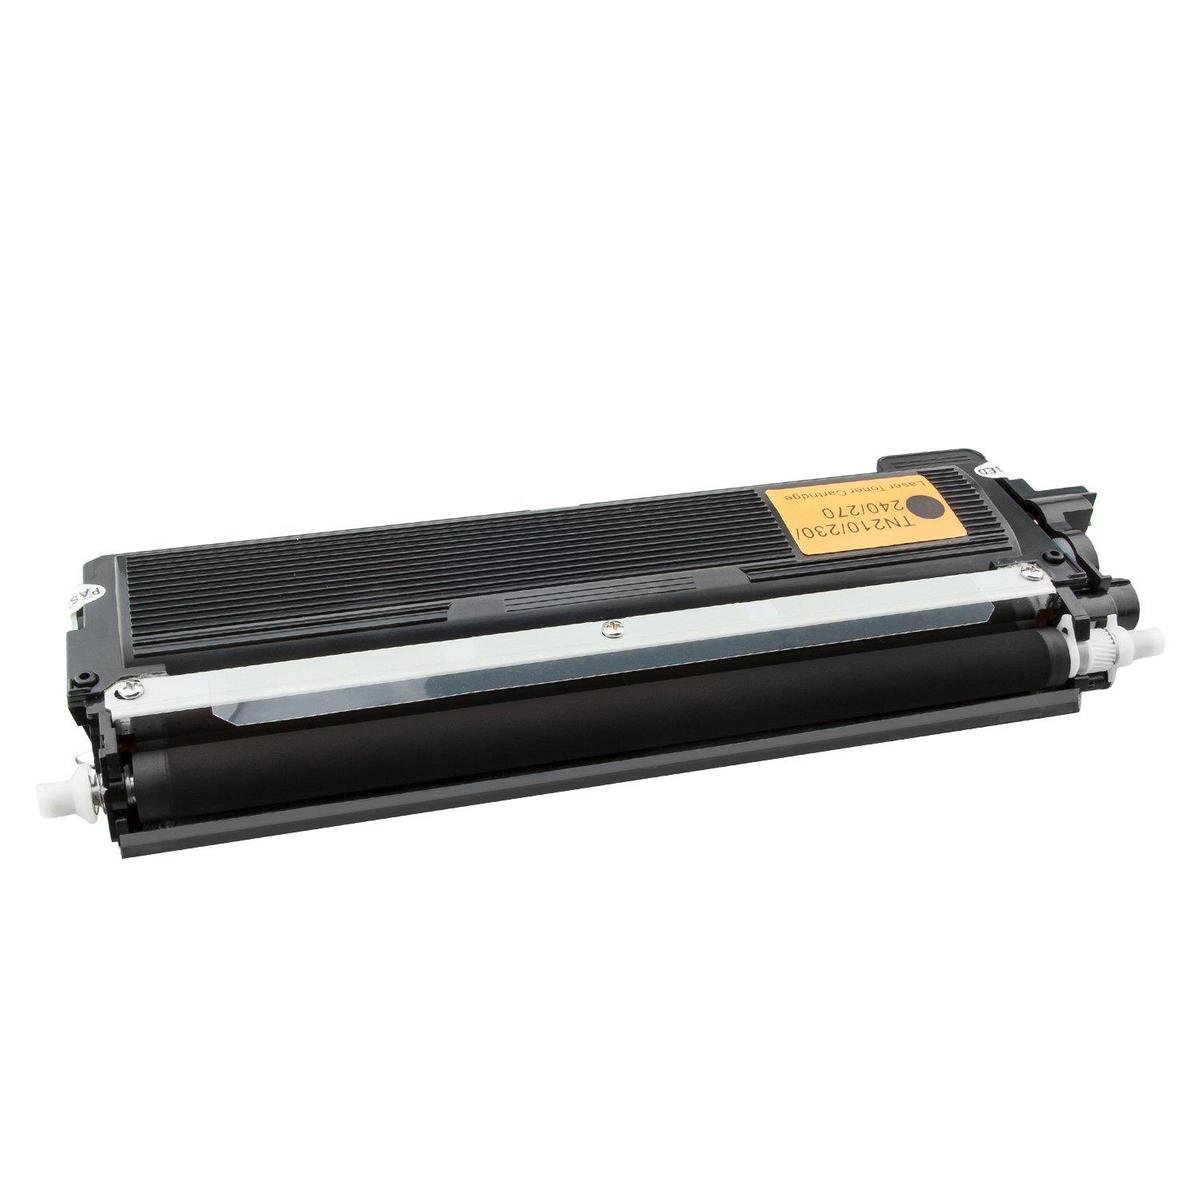 ActiveJet ATB-230BN toner voor brother printer; Brother TN-230BK Vervanging; Opperste; 2200 pagina's; zwart.